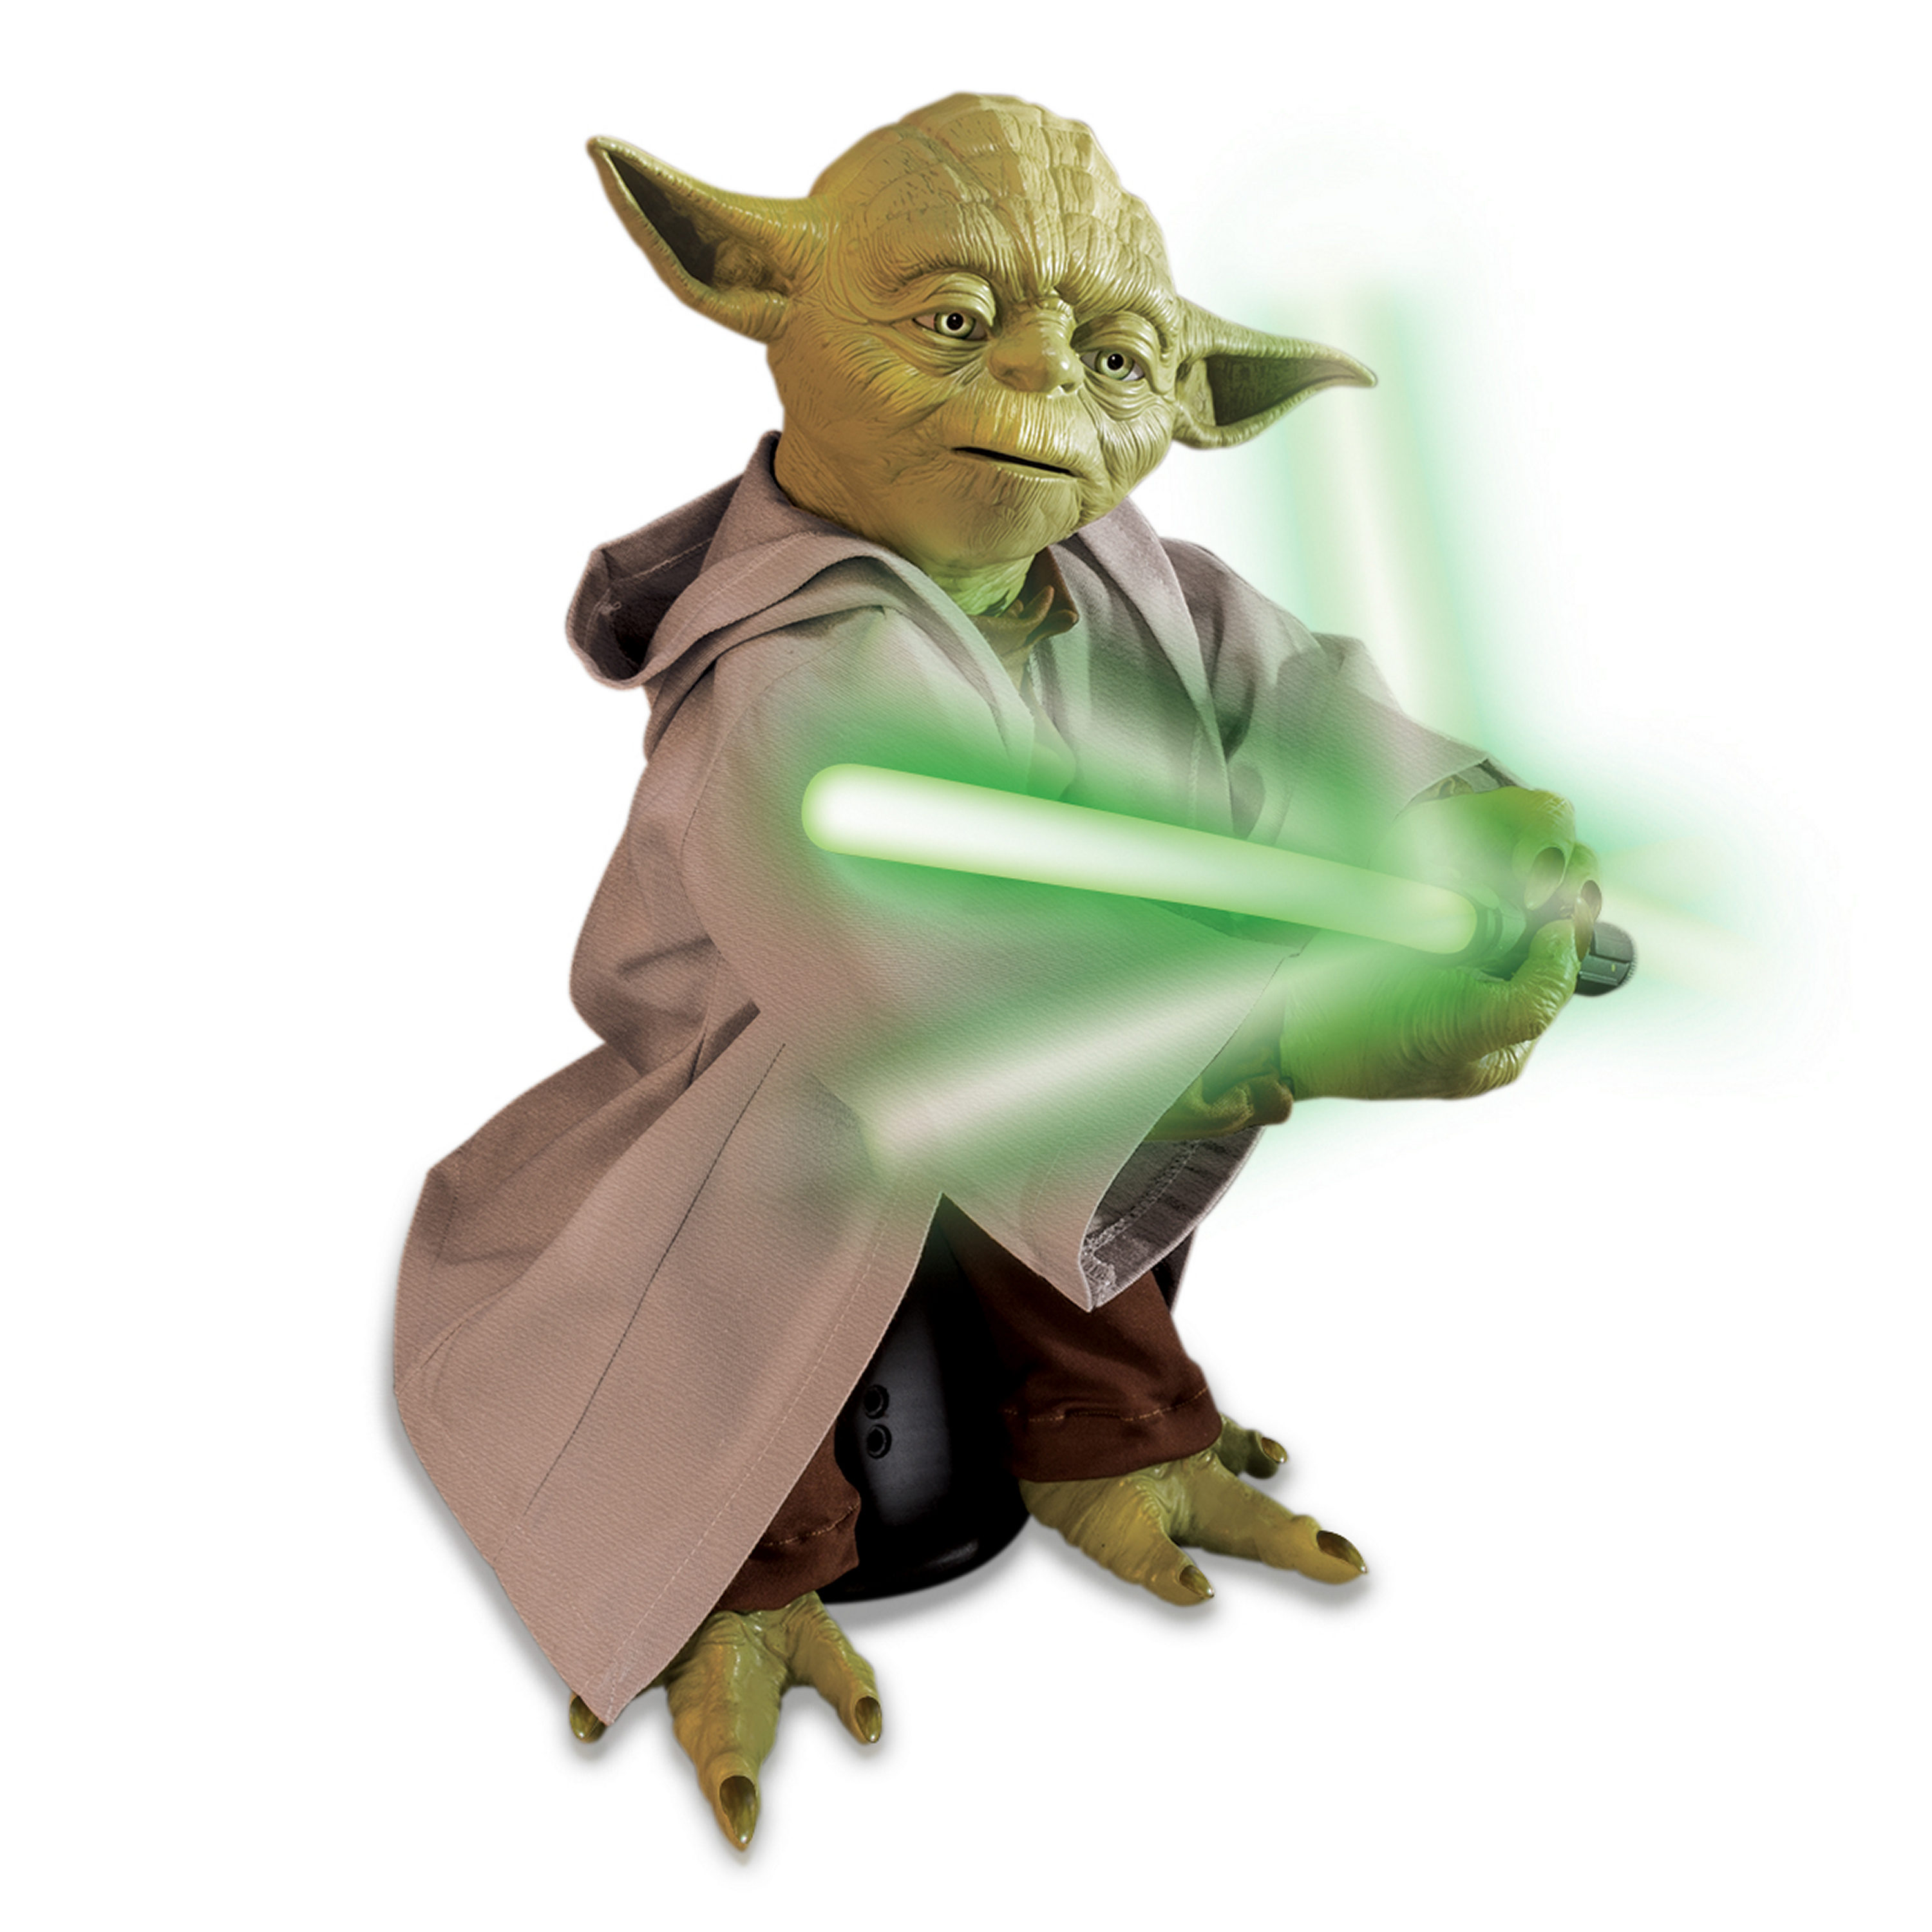 Star Wars Legendary Jedi Master Yoda - image 1 of 6